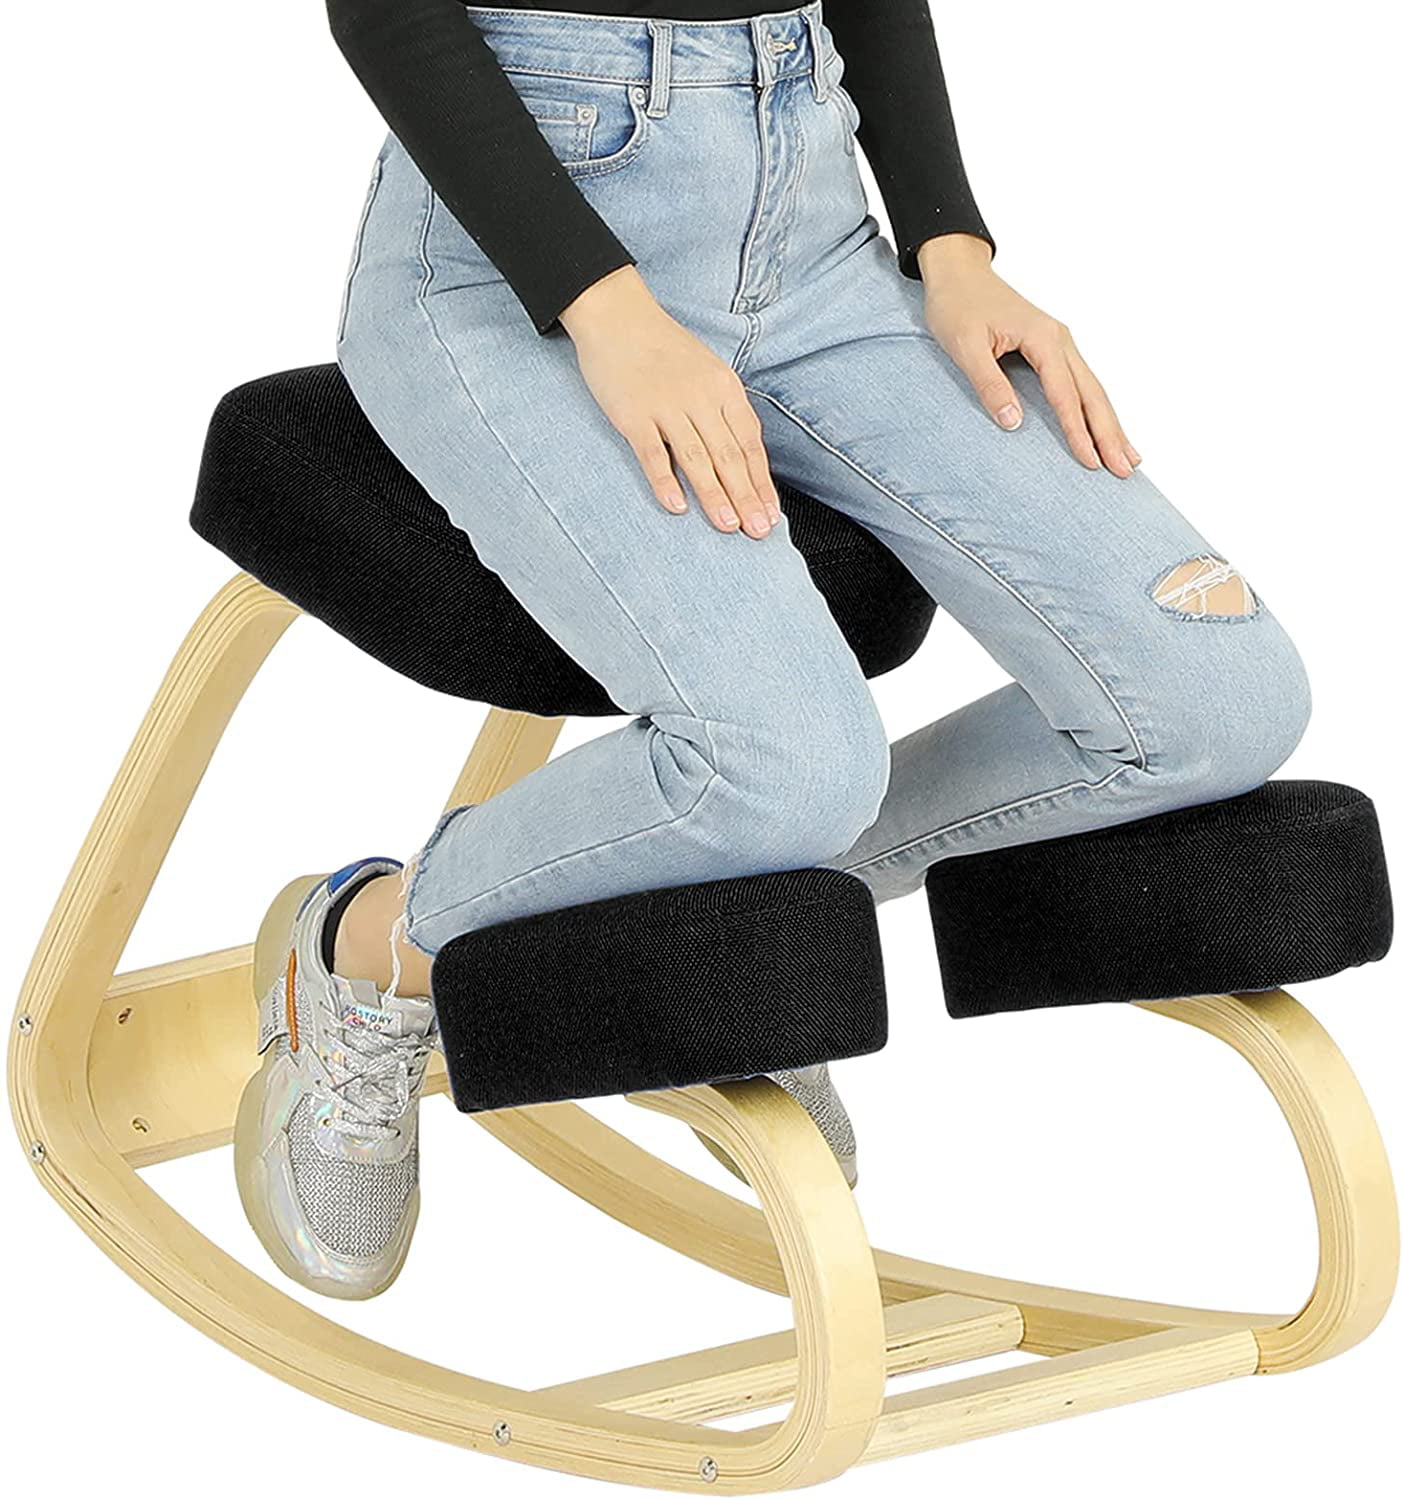 Sturdy Ergonomic Wooden Kneeling Chair Rocking Kneel Stool for Improving Posture 